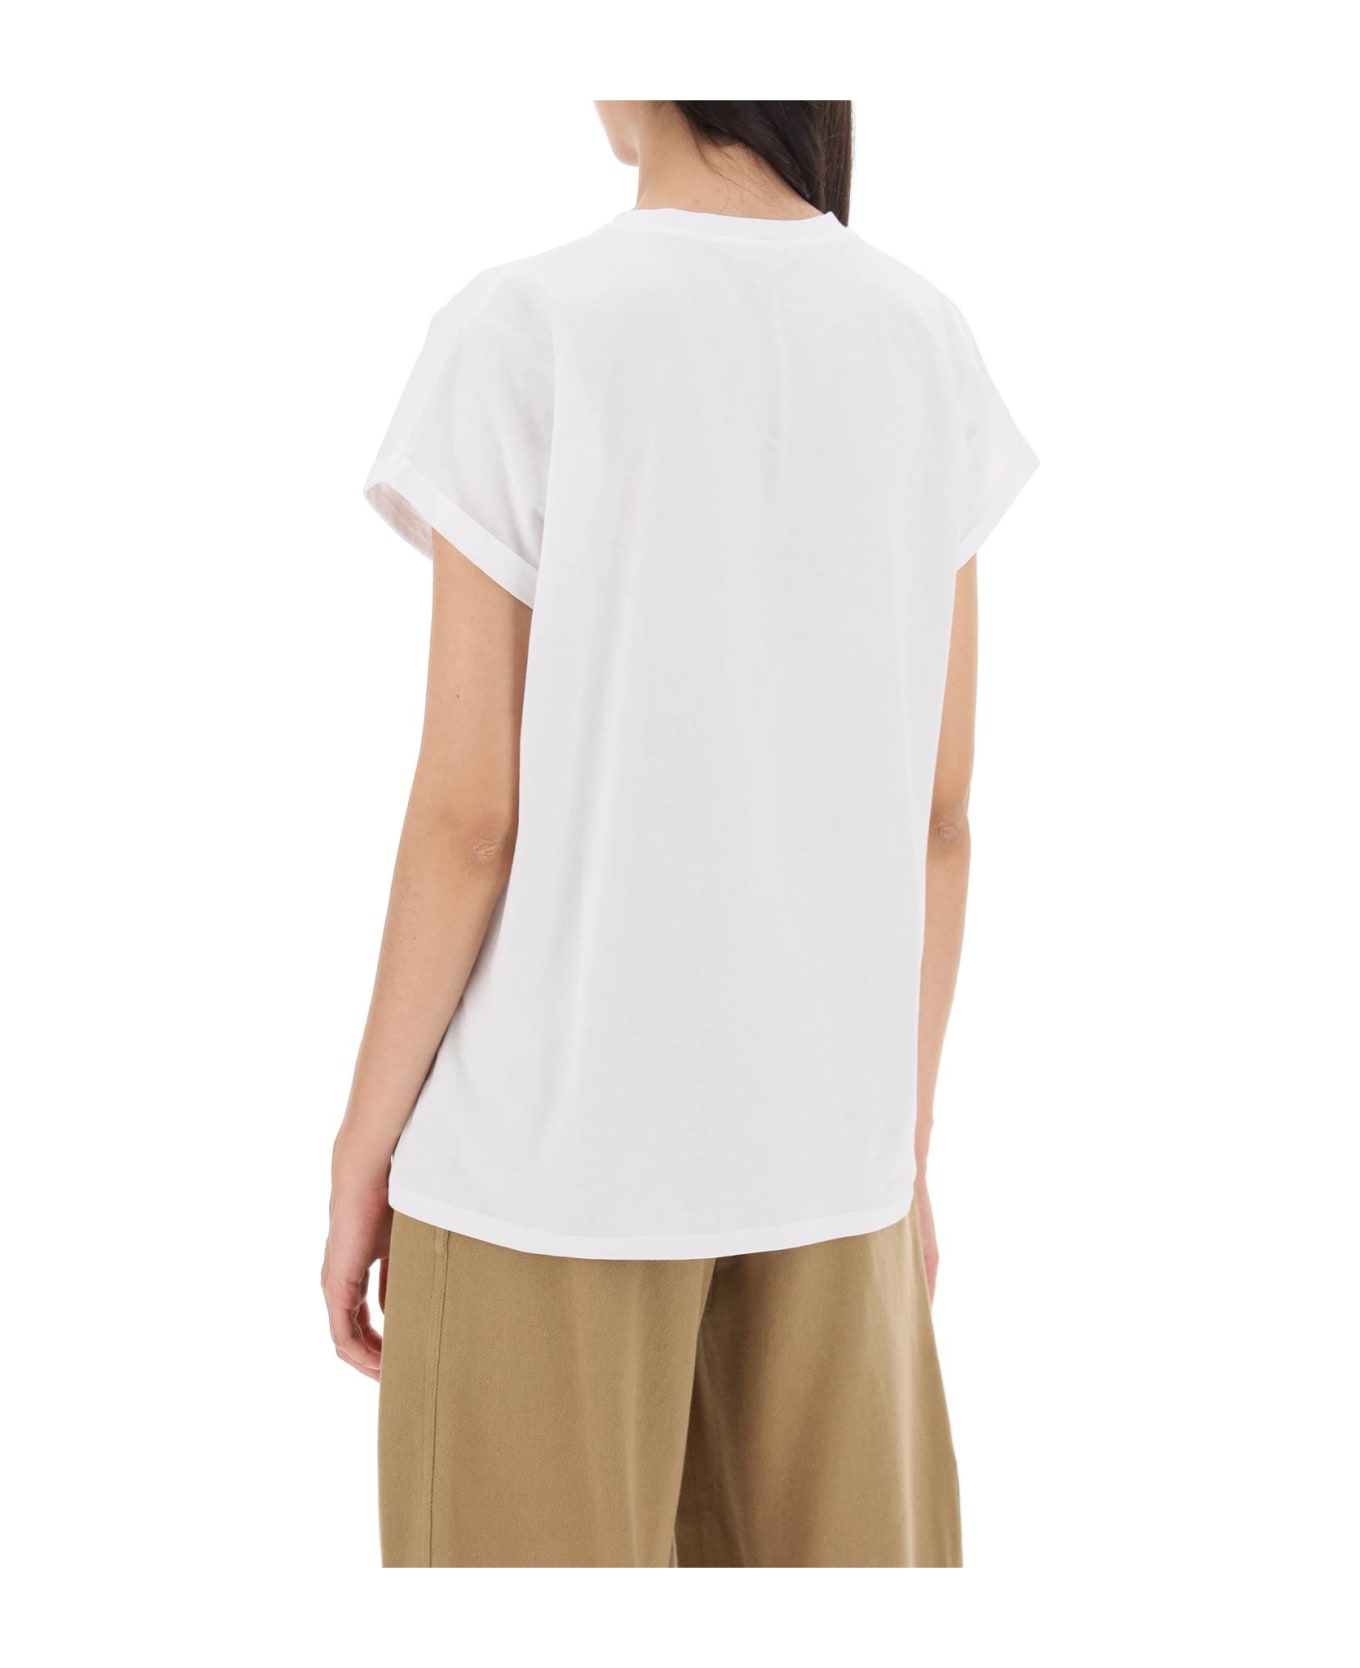 Balmain Flocked Logo T-shirt - White Tシャツ